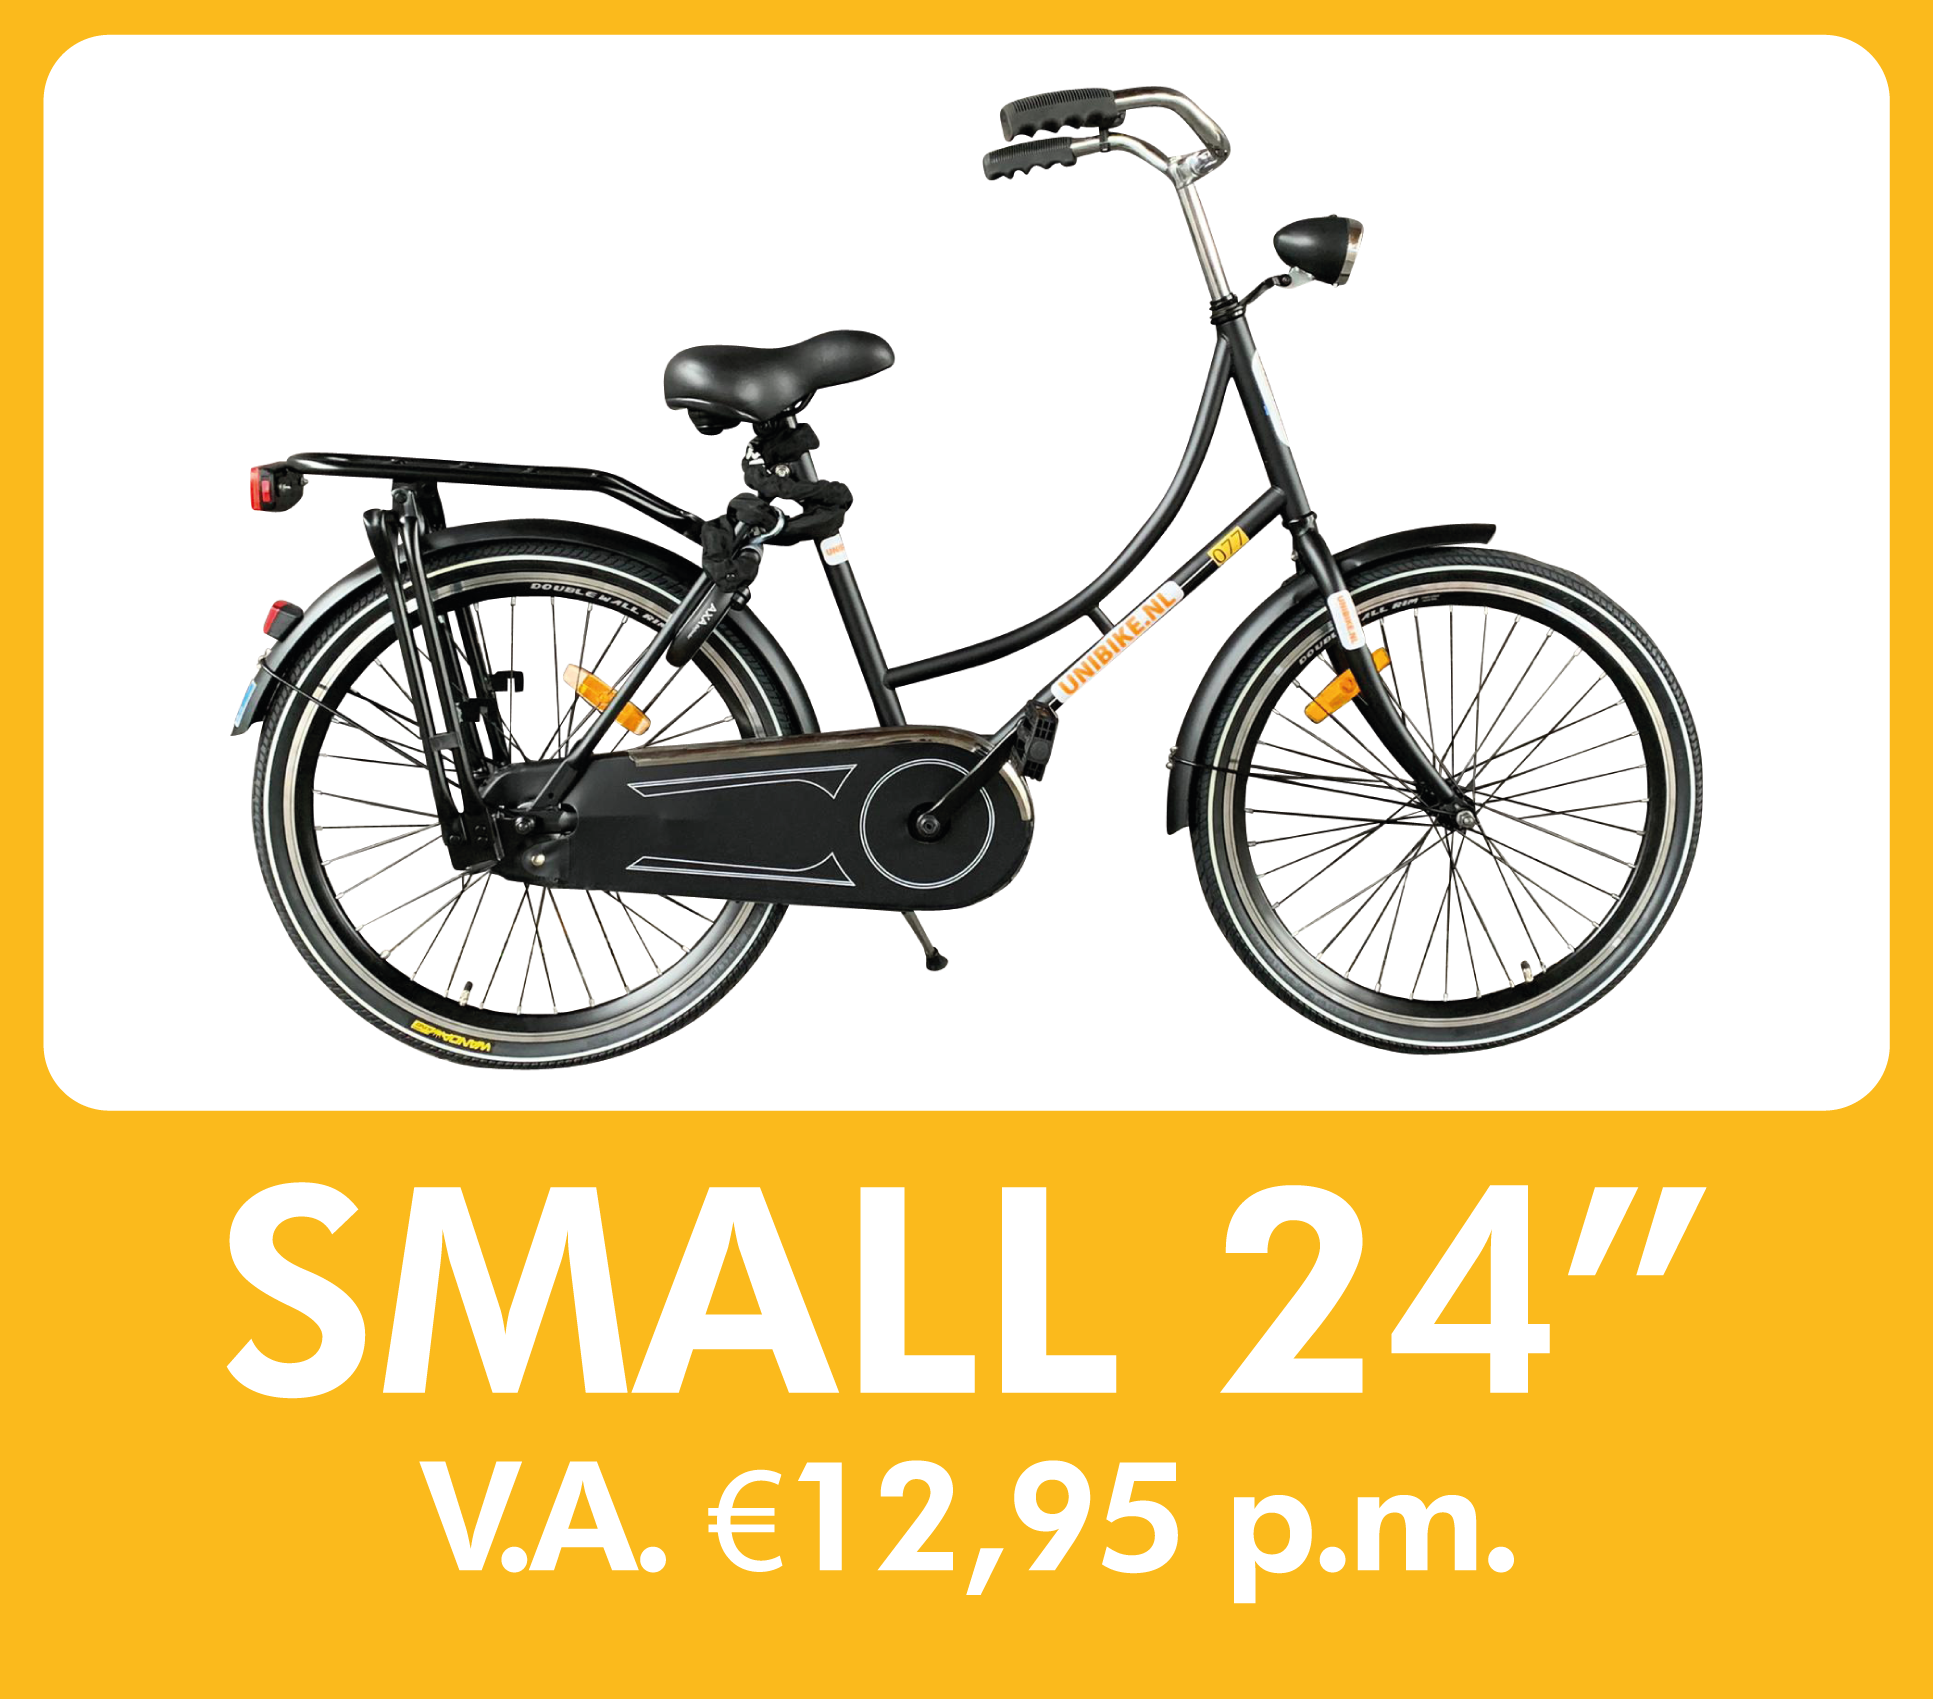 fiets leasen small 24 inch